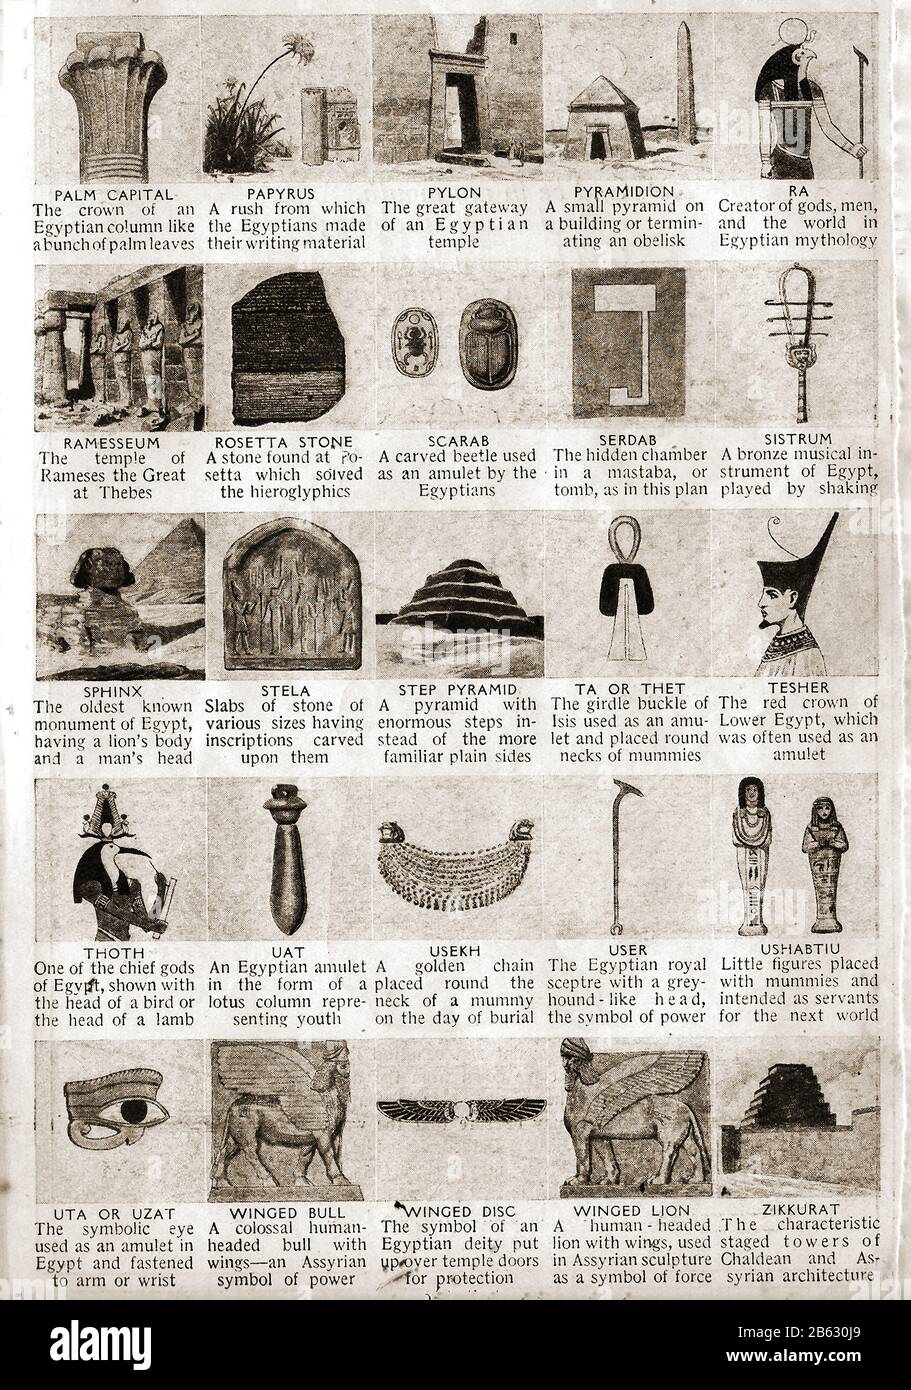 1920's magazine page showing artifacts and symbols relating to ancient Egypt. Palm capital column, papyrus, pylon, gateway,temple,ra, temple, rameses, thebes,rosetta, stone,scarab, amulet, ramesseum,serdab,chamber, tomb,sistrum, musical, music,sphinx,stela,step , pyramid,ta,thet,tesher,crown,thoth, uat,usekh, user,power symbol,ushabtiu figures,uta,uzat, winged bull,winged disc, winged lion and zikkurat. Stock Photo